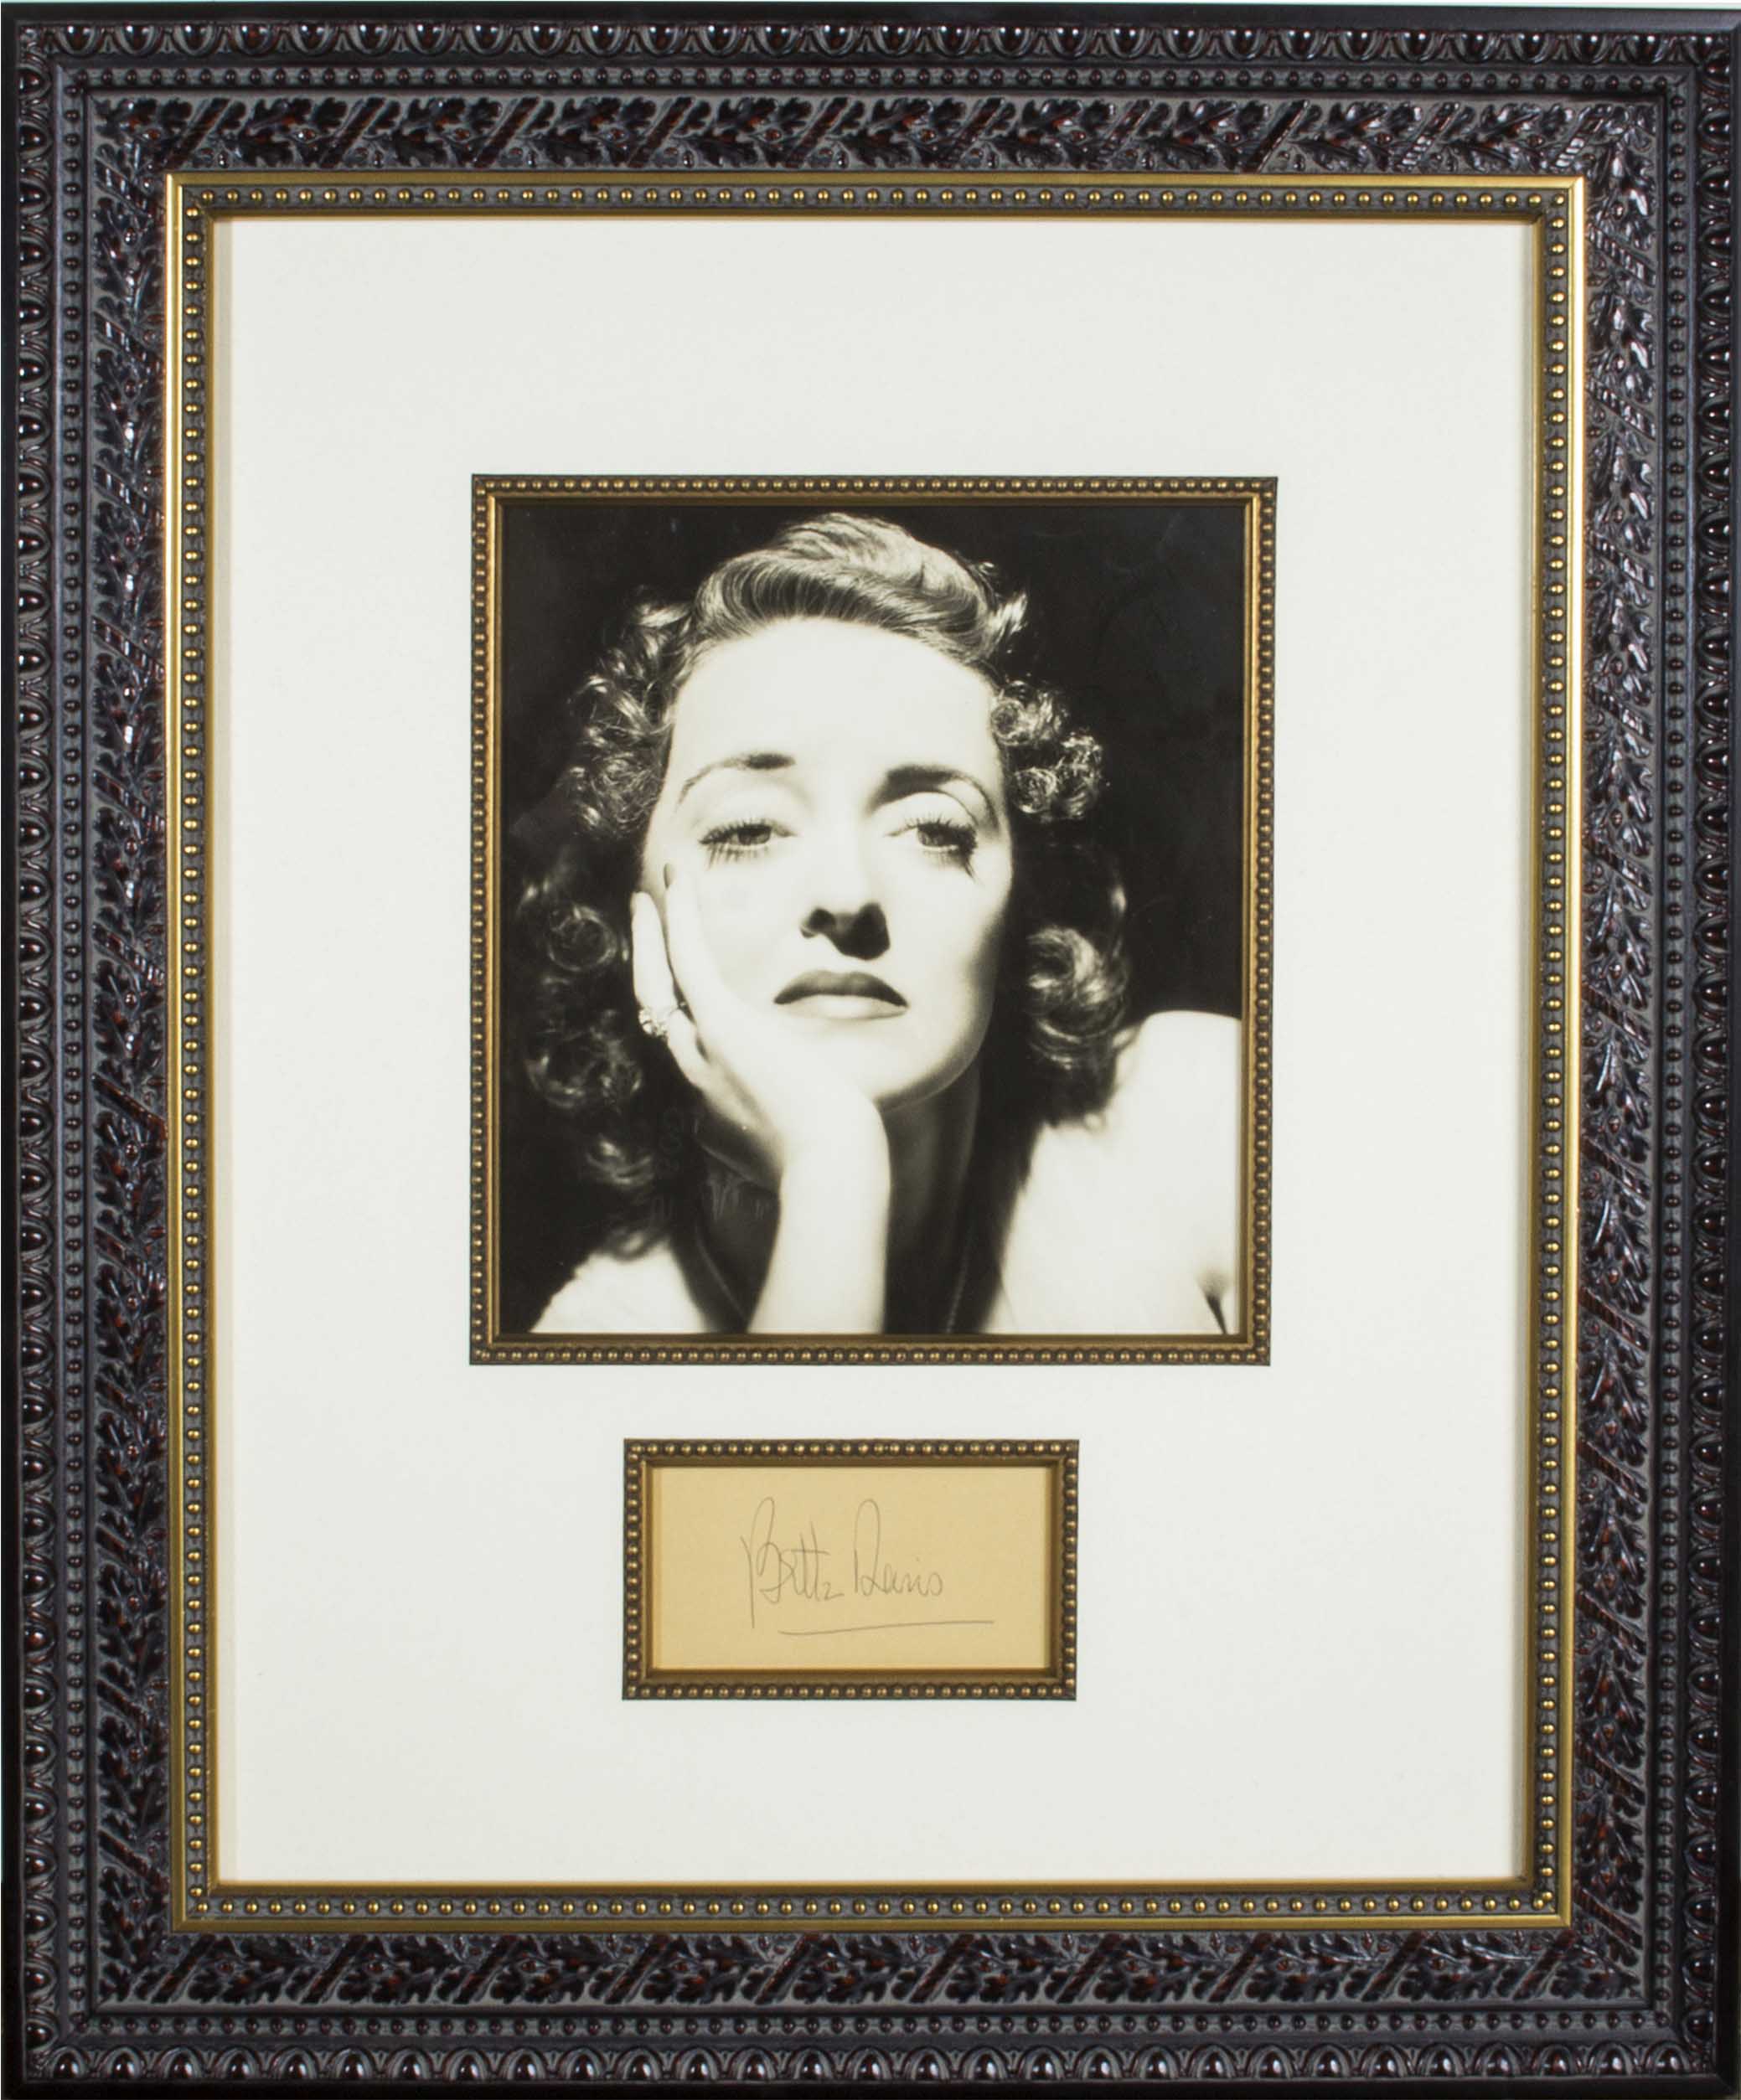 A framed photograph and autograph of Bette Davis